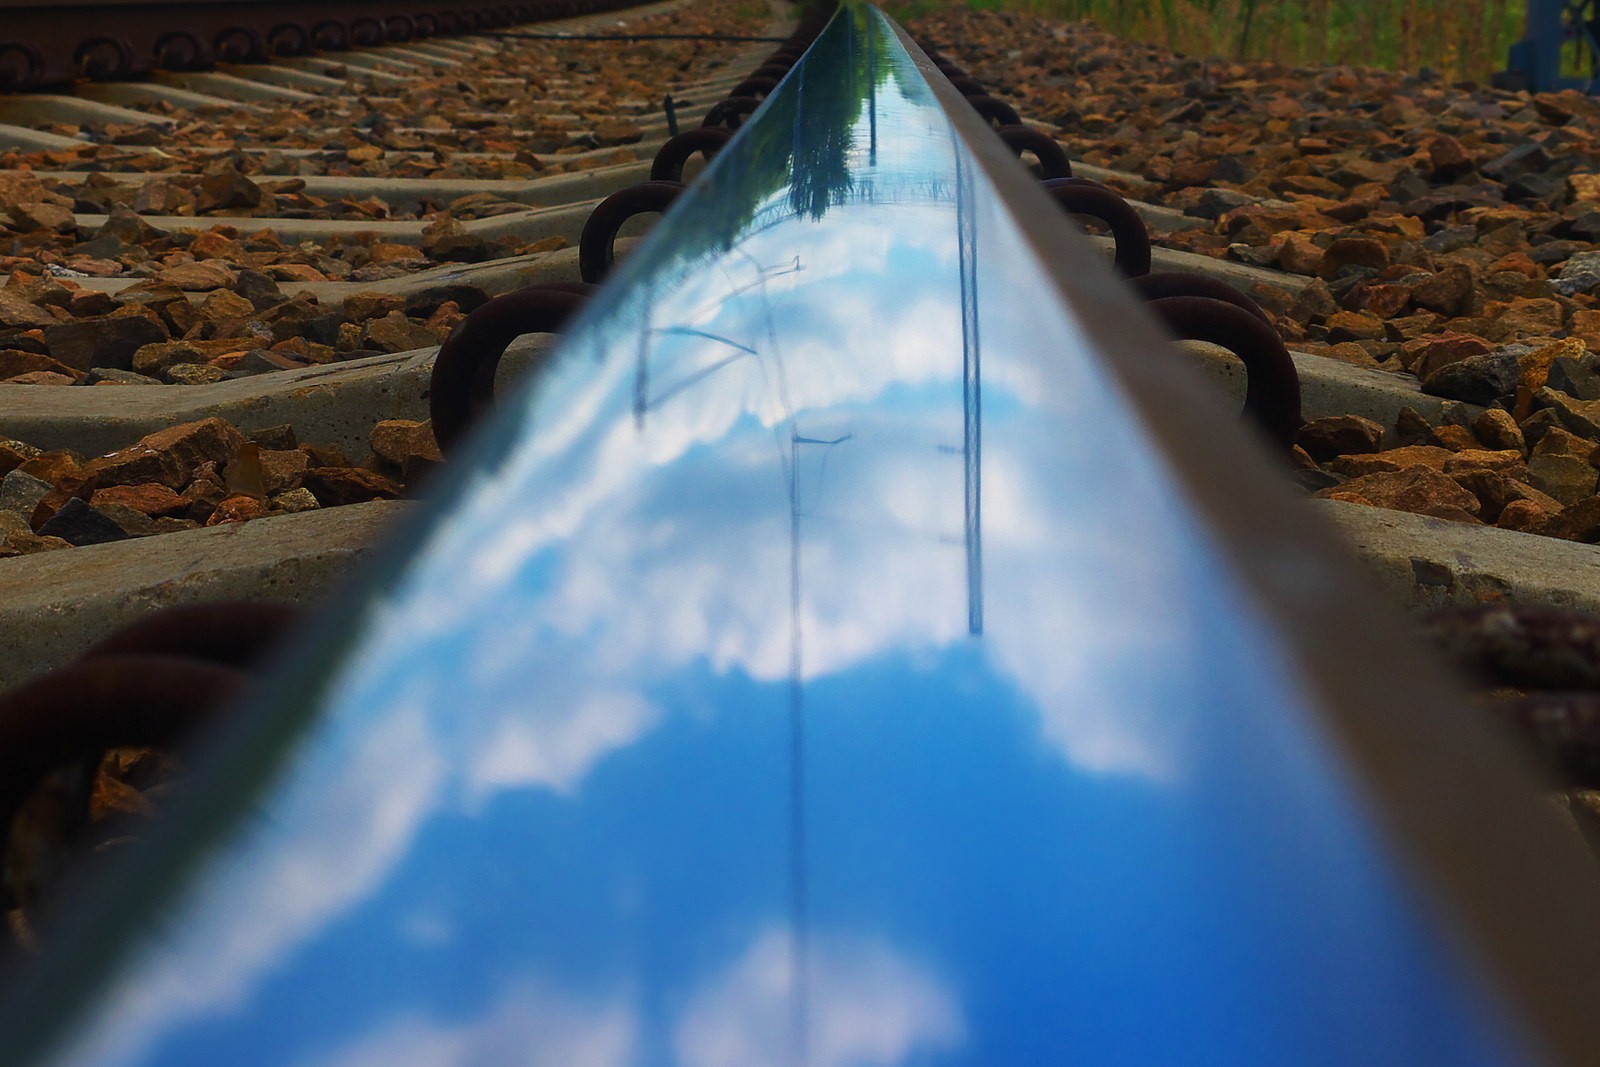 General 1600x1067 railway reflection stones clouds sky metal worm's eye view closeup